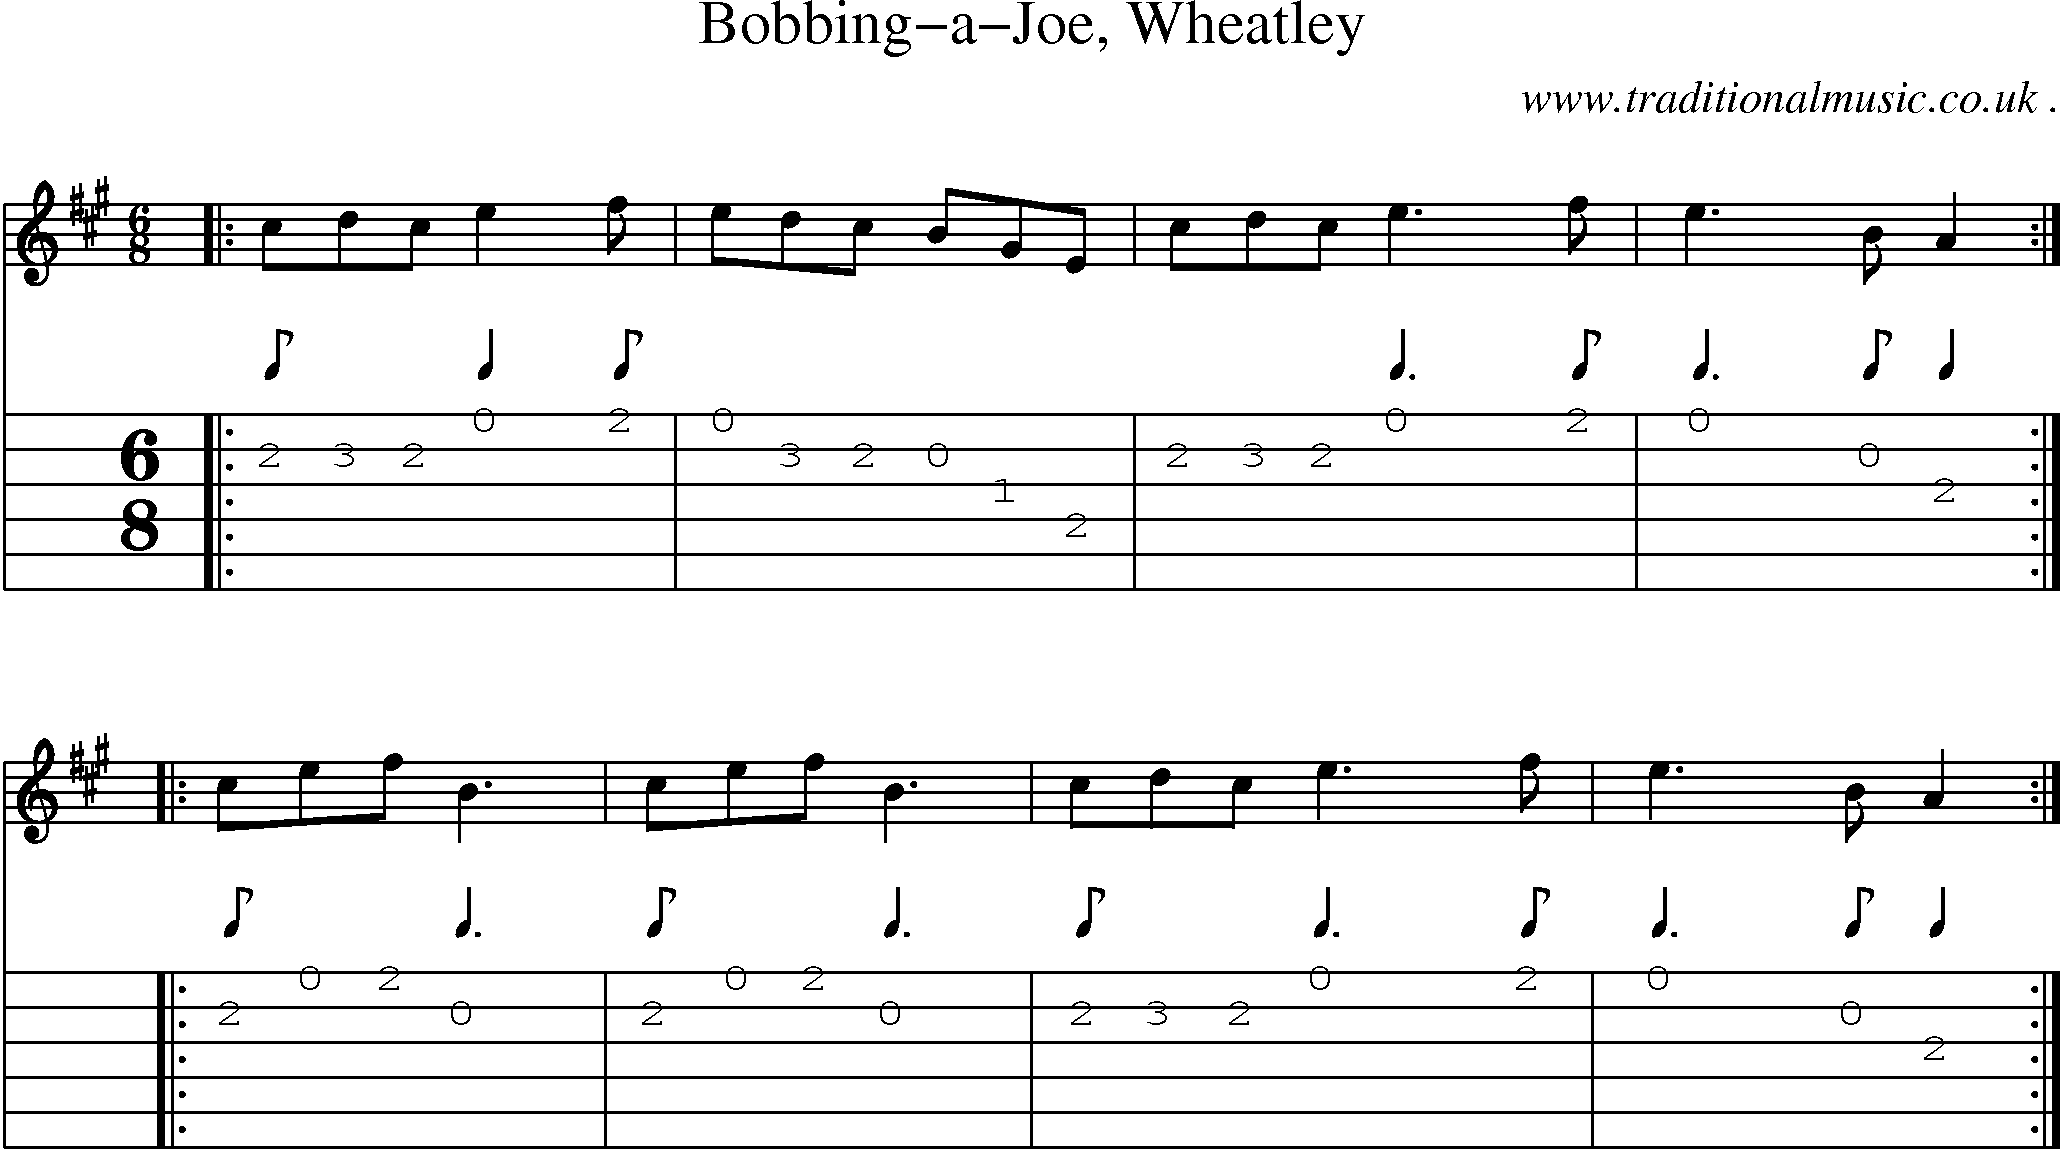 Sheet-Music and Guitar Tabs for Bobbing-a-joe Wheatley